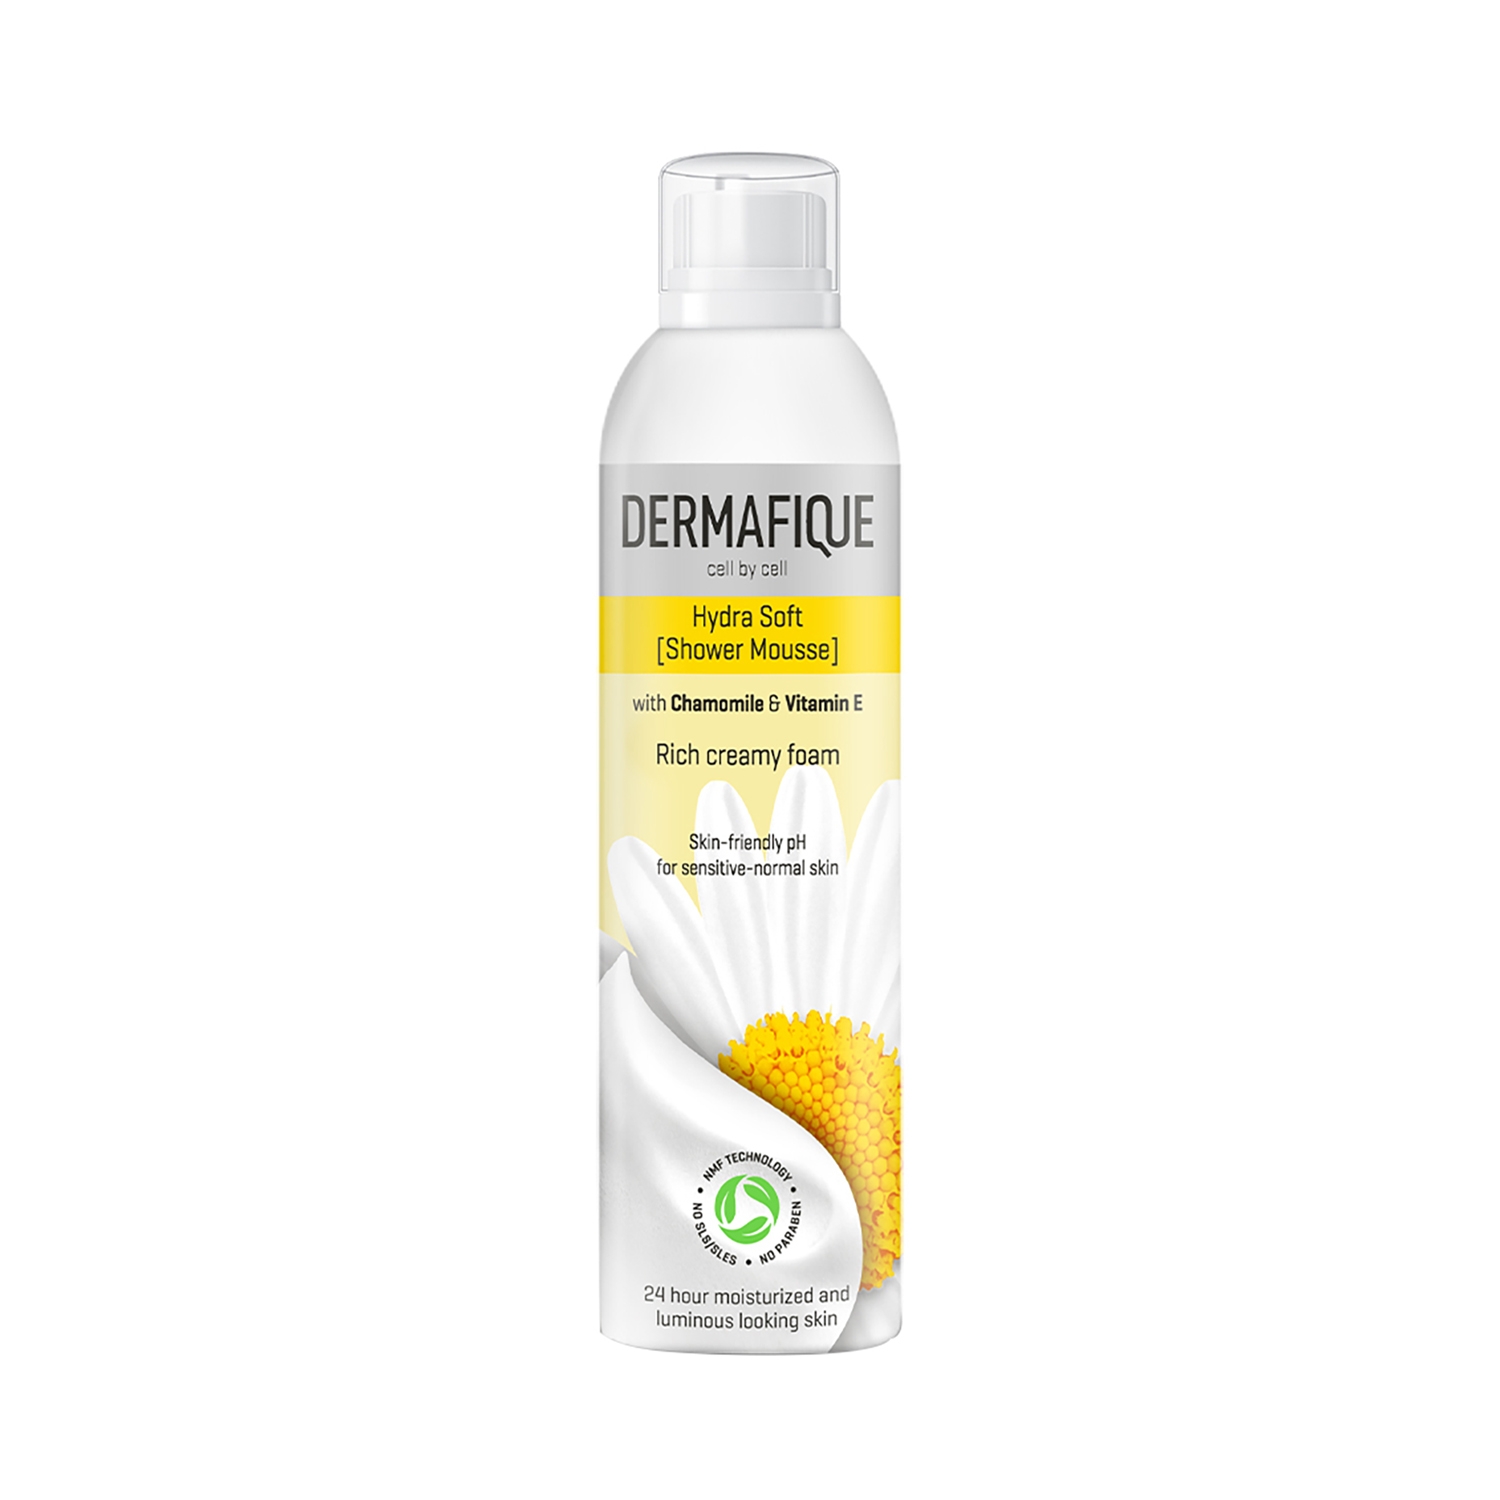 Dermafique Hydra Soft Shower Mousse (200ml)